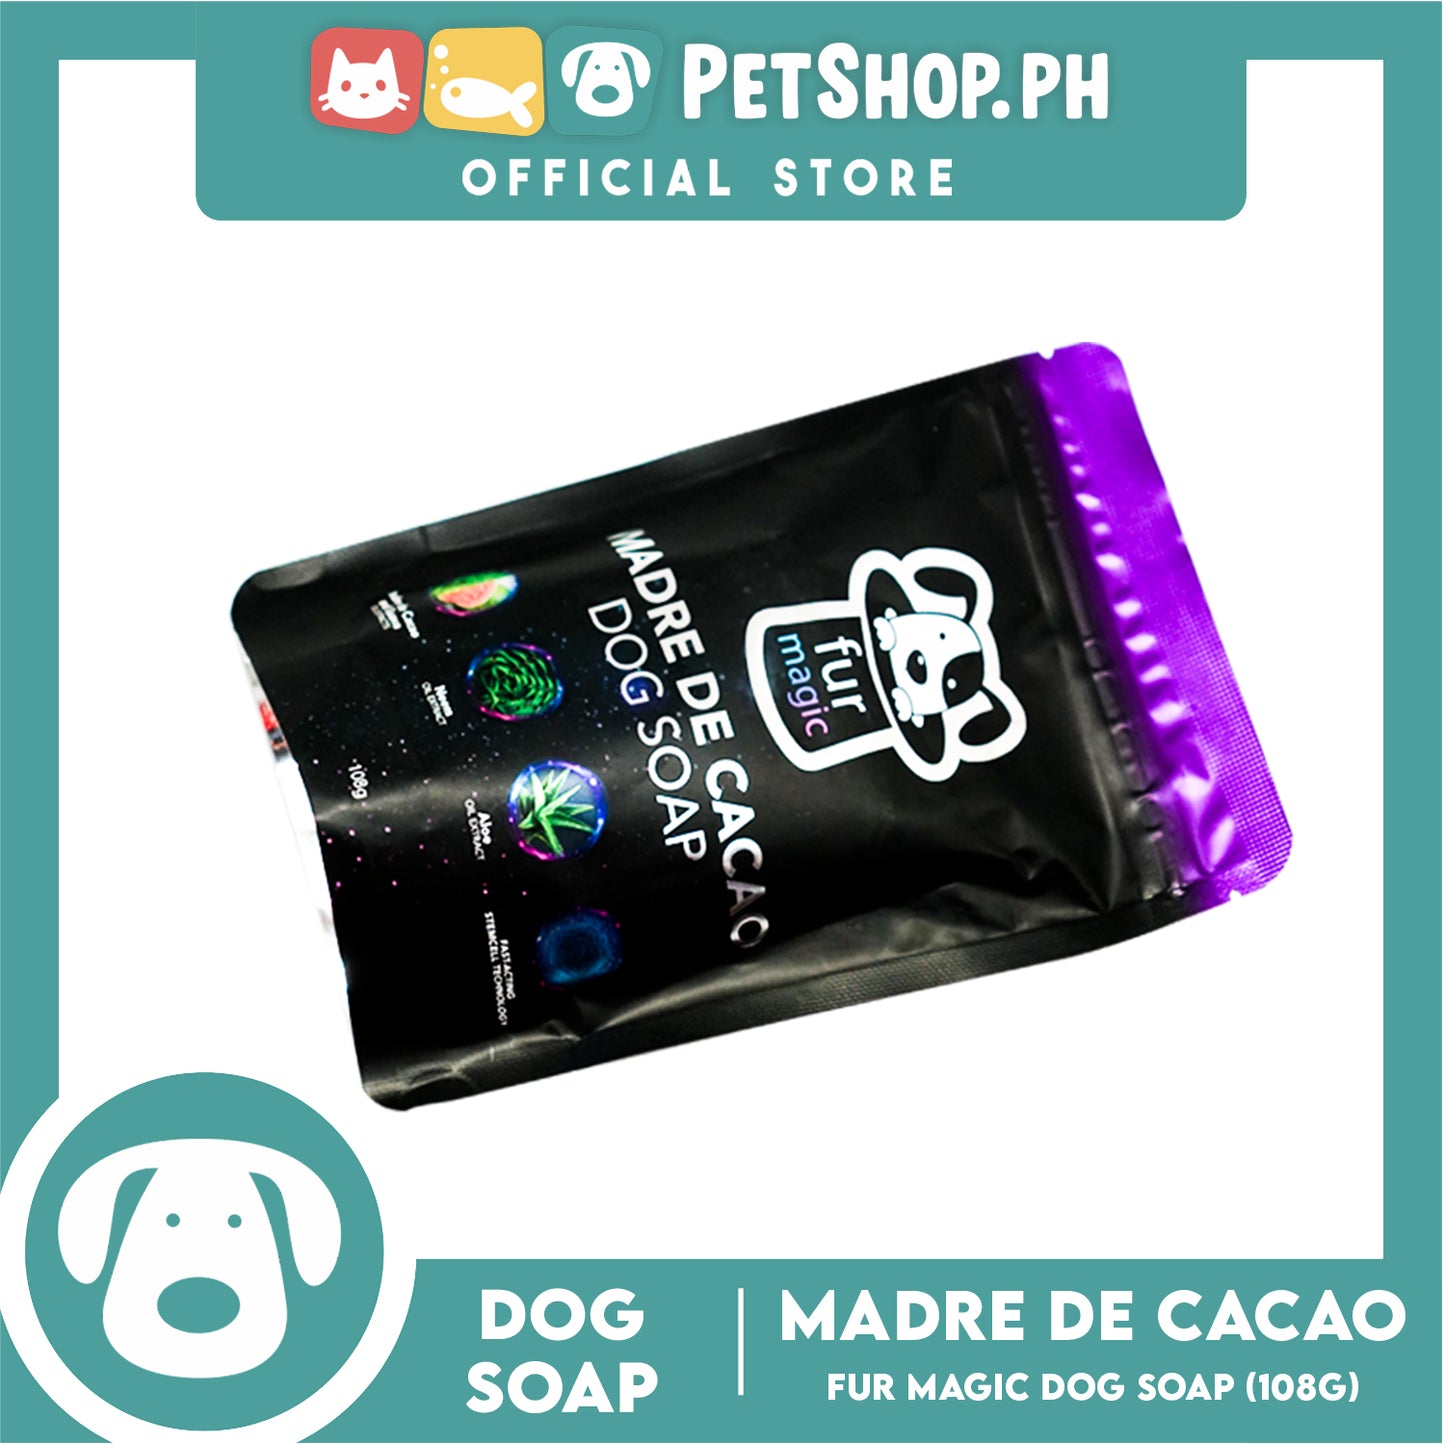 Fur magic Madre de Cacao 108g (Violet) Dog Soap